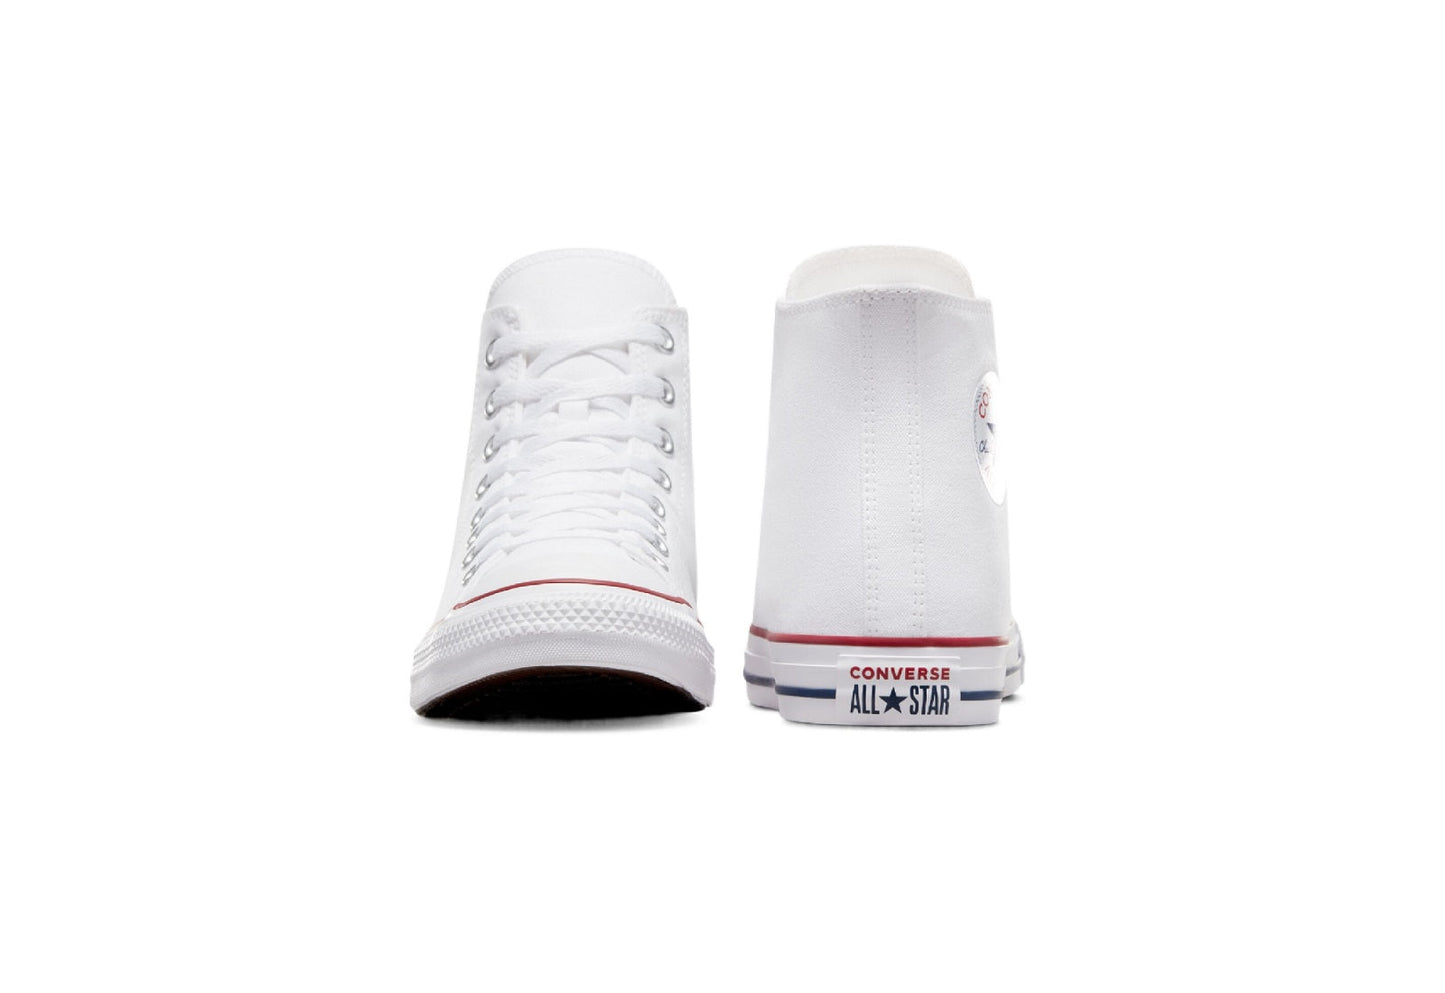 Converse Chuck Taylor All Star High Top Canvas Sneaker, Optical White (Women)